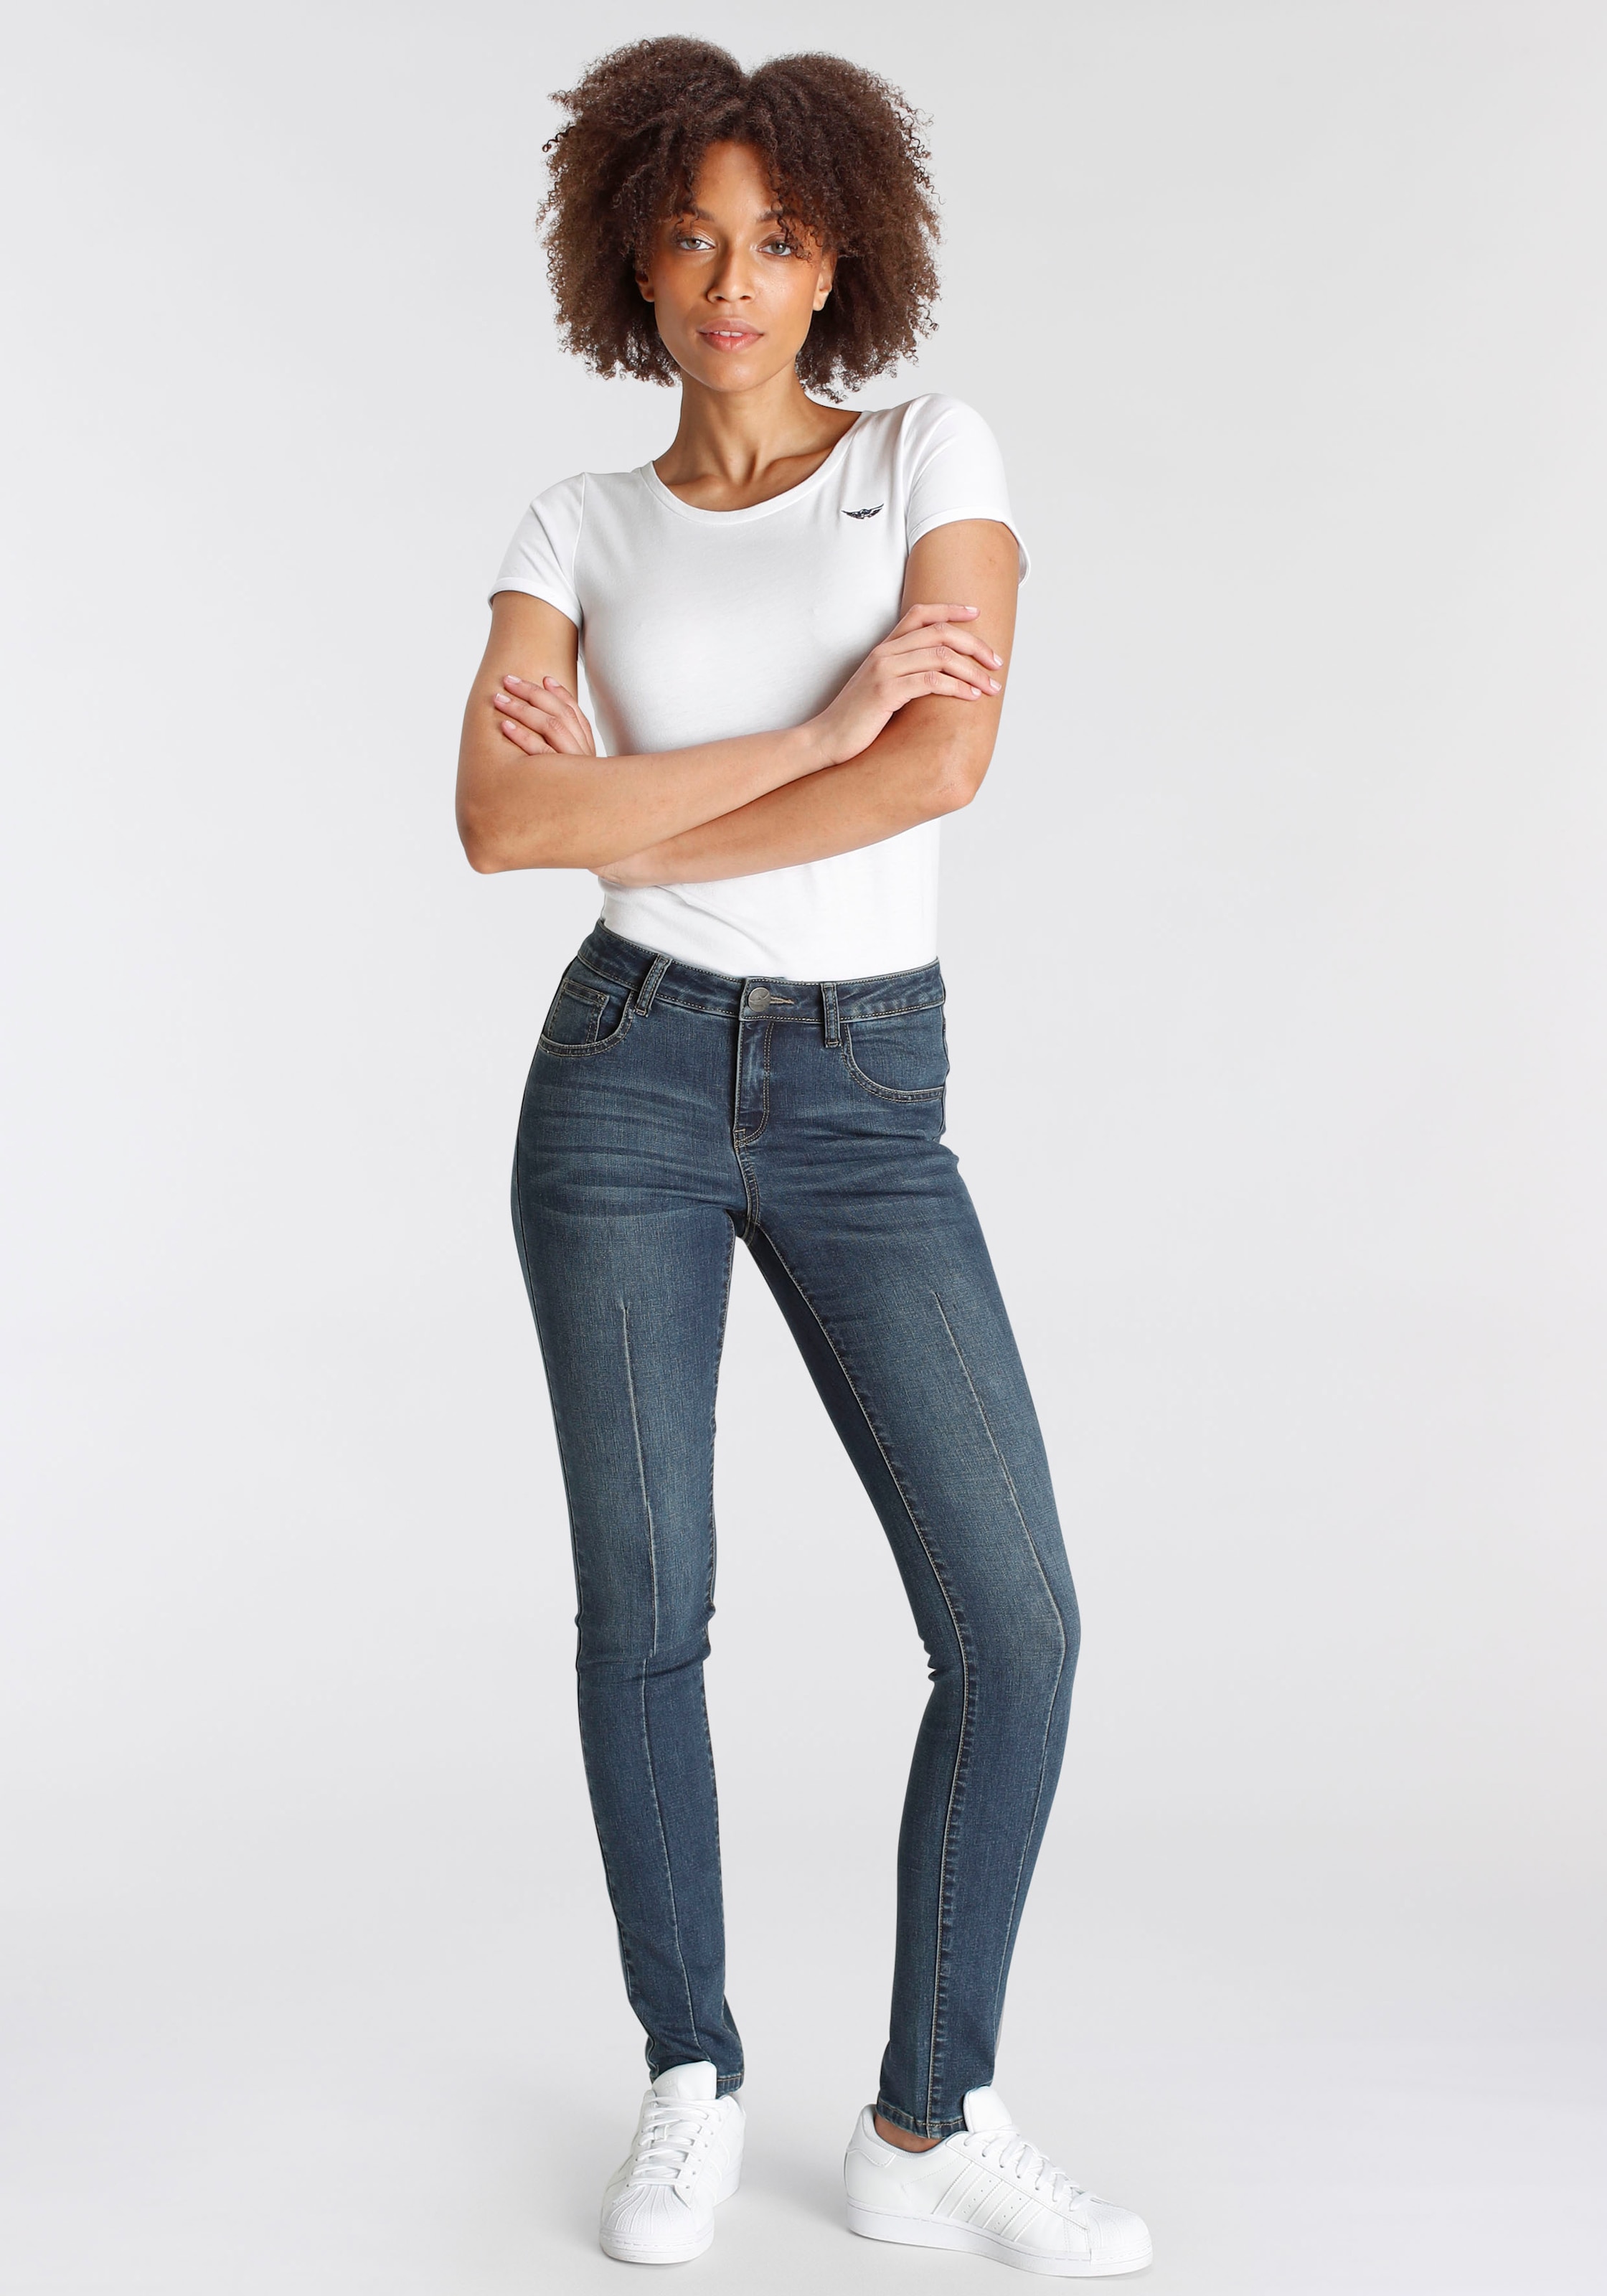 Arizona normale Skinny-fit-Jeans sehr »Ultra-Stretch, bequem, performance kombinieren«, Waist shoppen Denim Leibhöhe figurbetont stretch Mid high zu gut